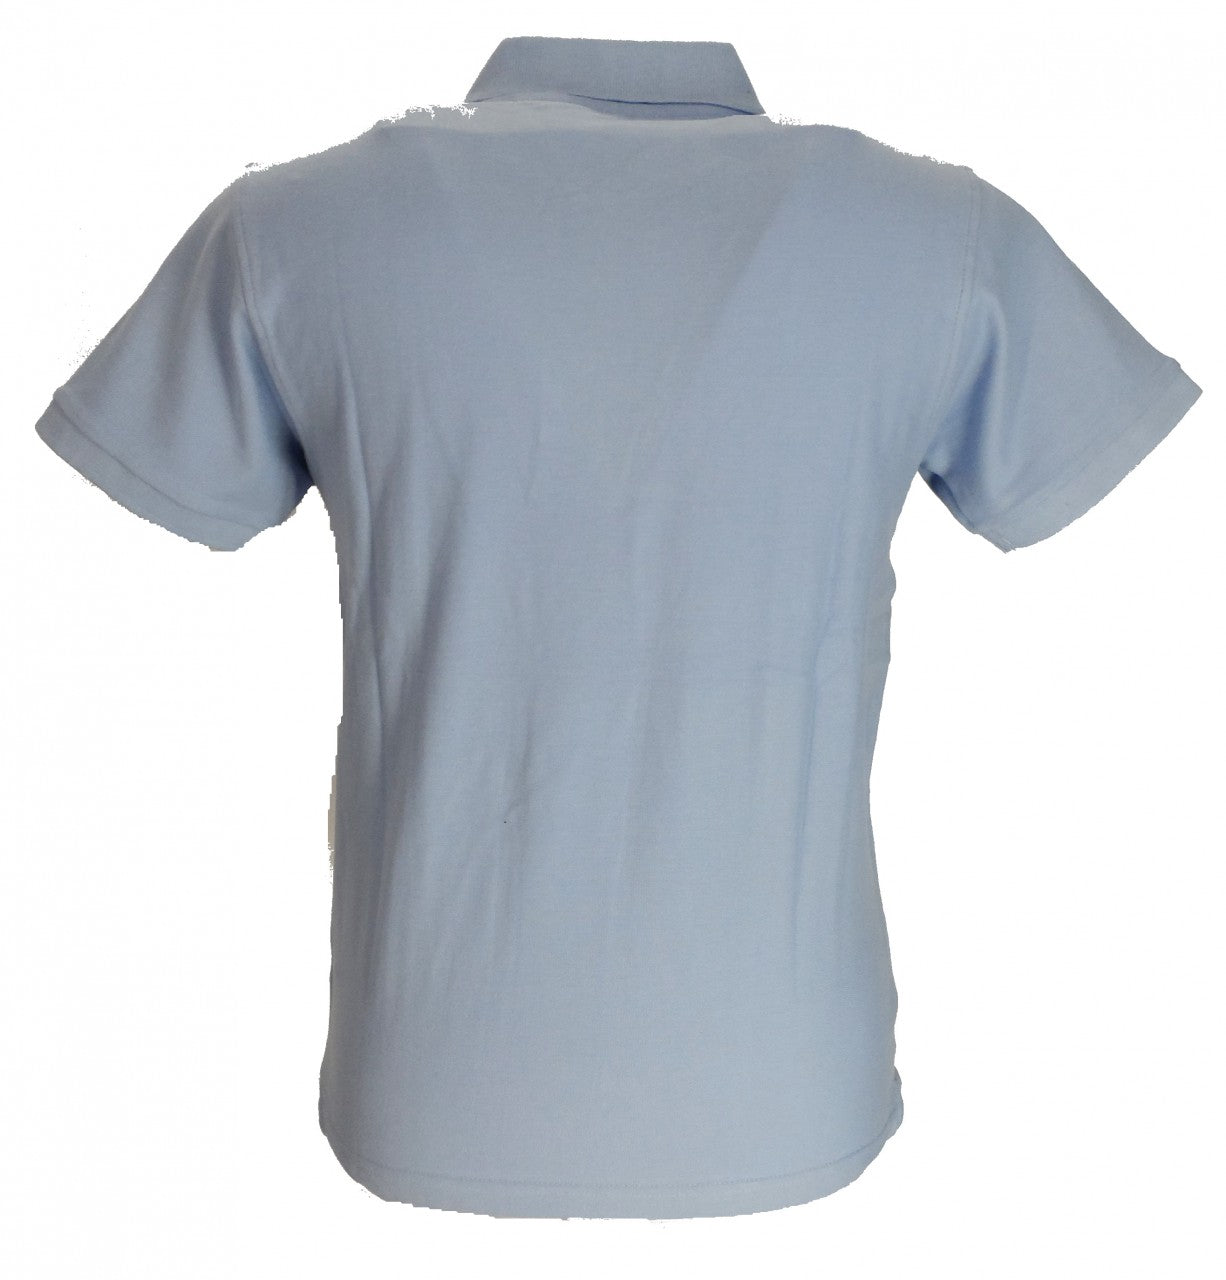 Relco stribet vintage stil Mod Polo Shirts sky/navy